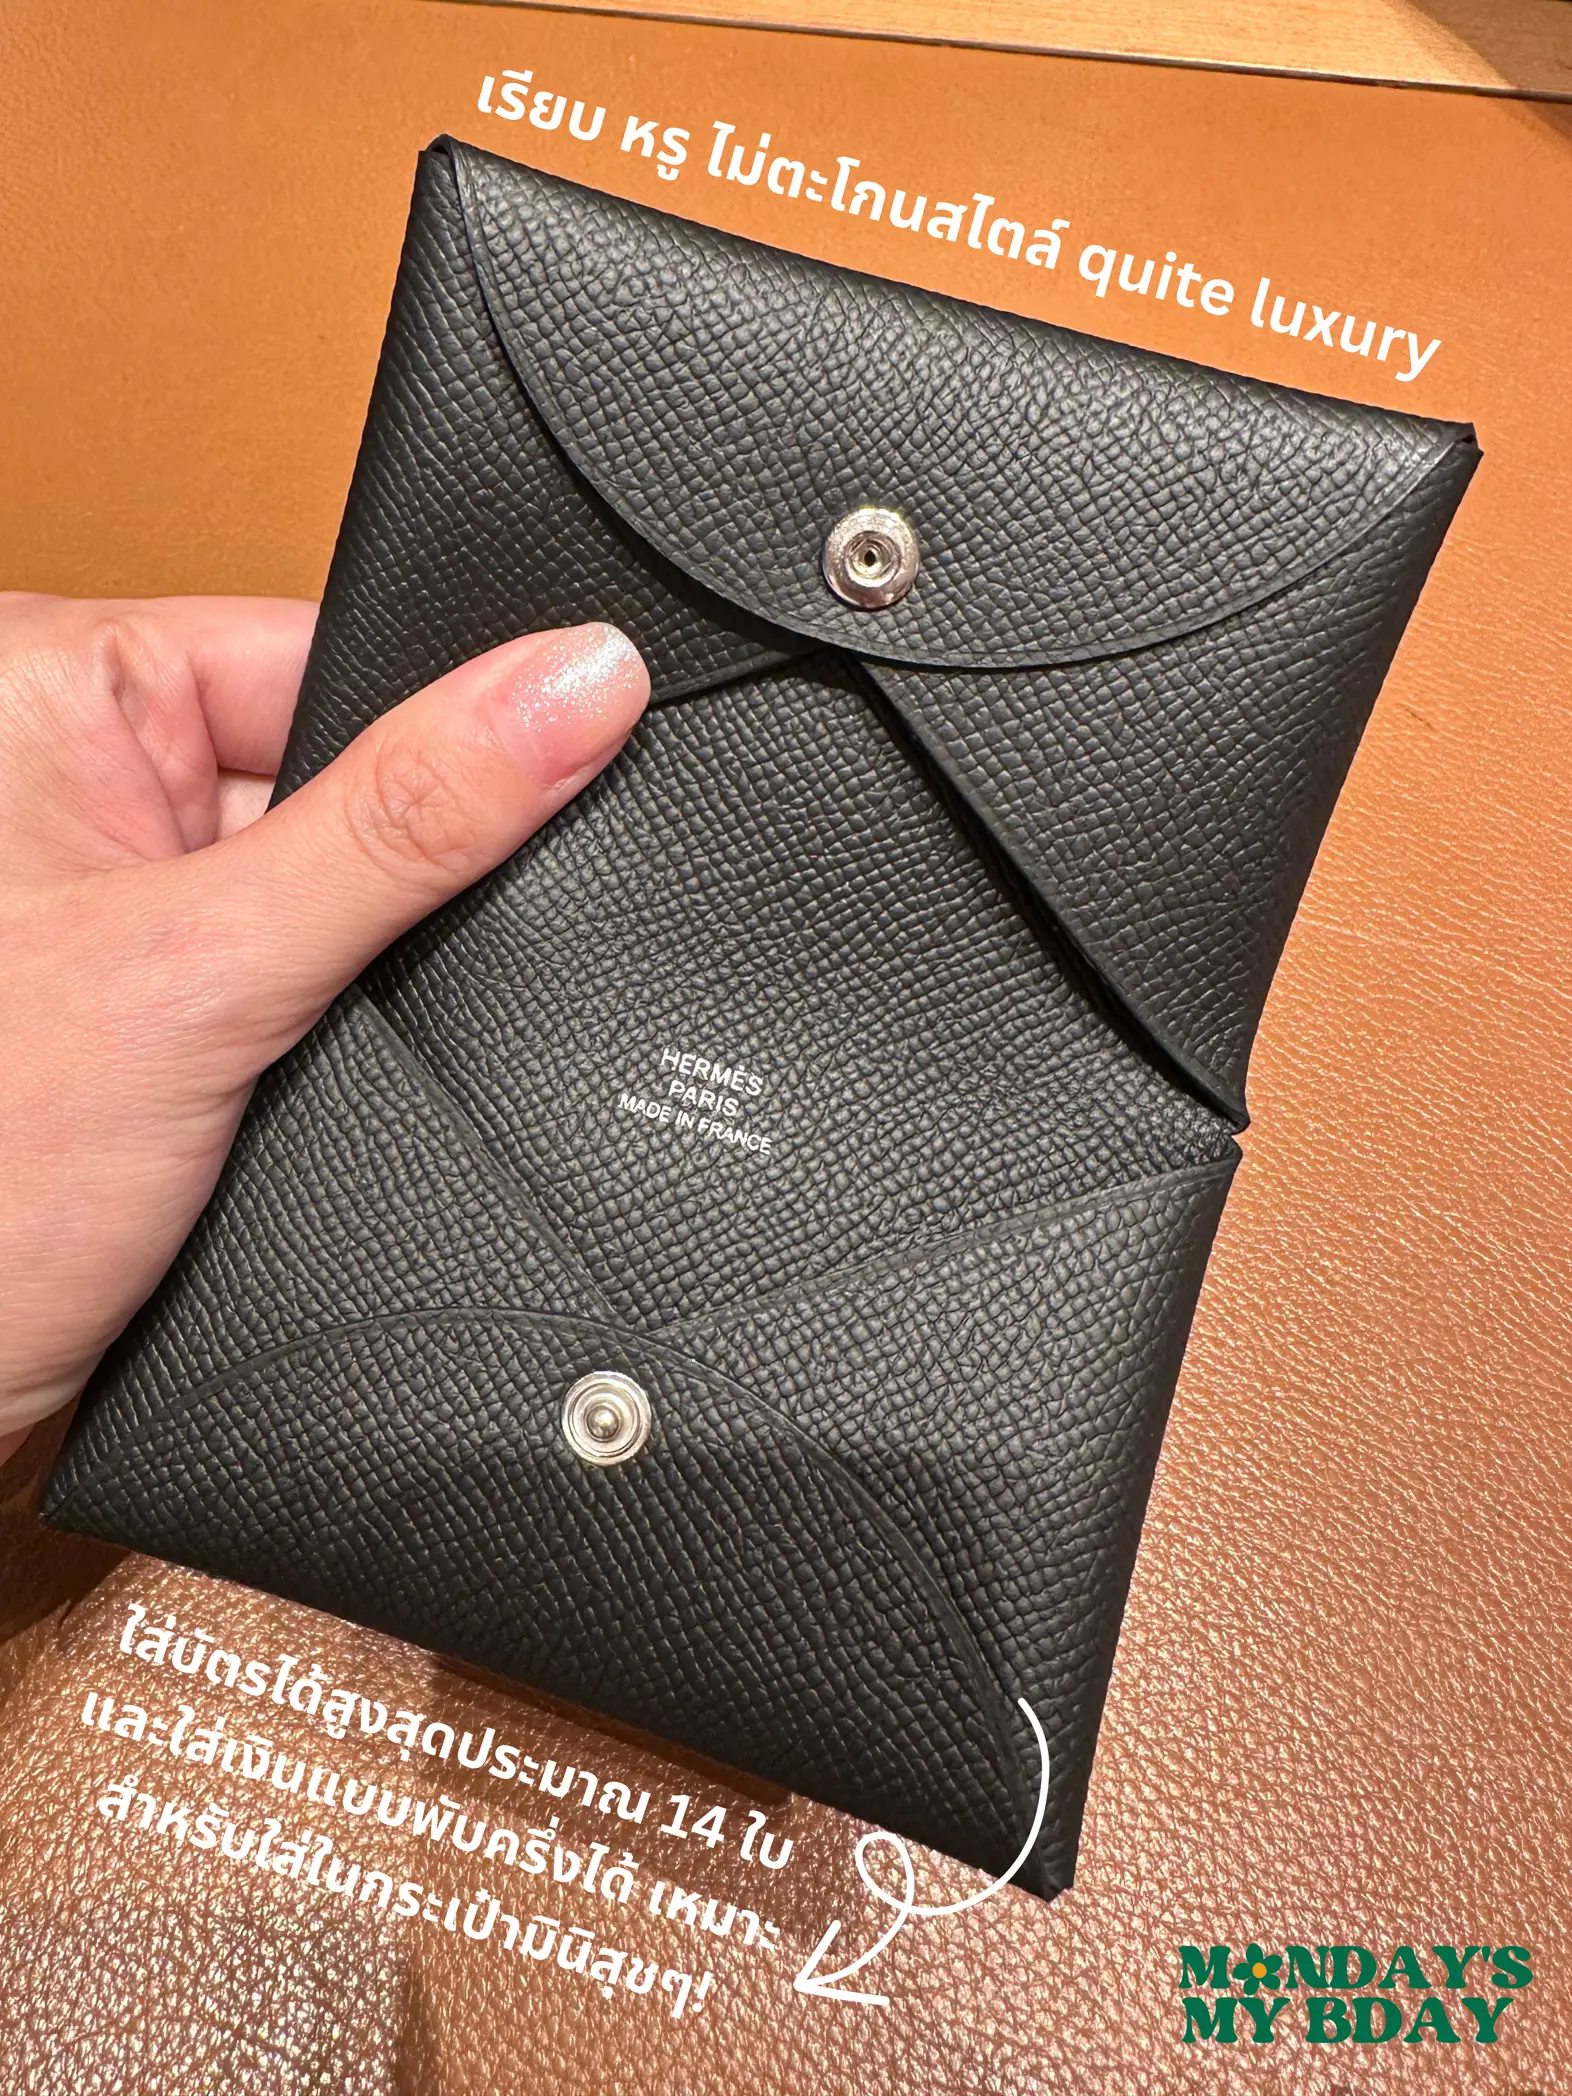 Shop HERMES Calvi Unisex Plain Leather Folding Wallet Small Wallet